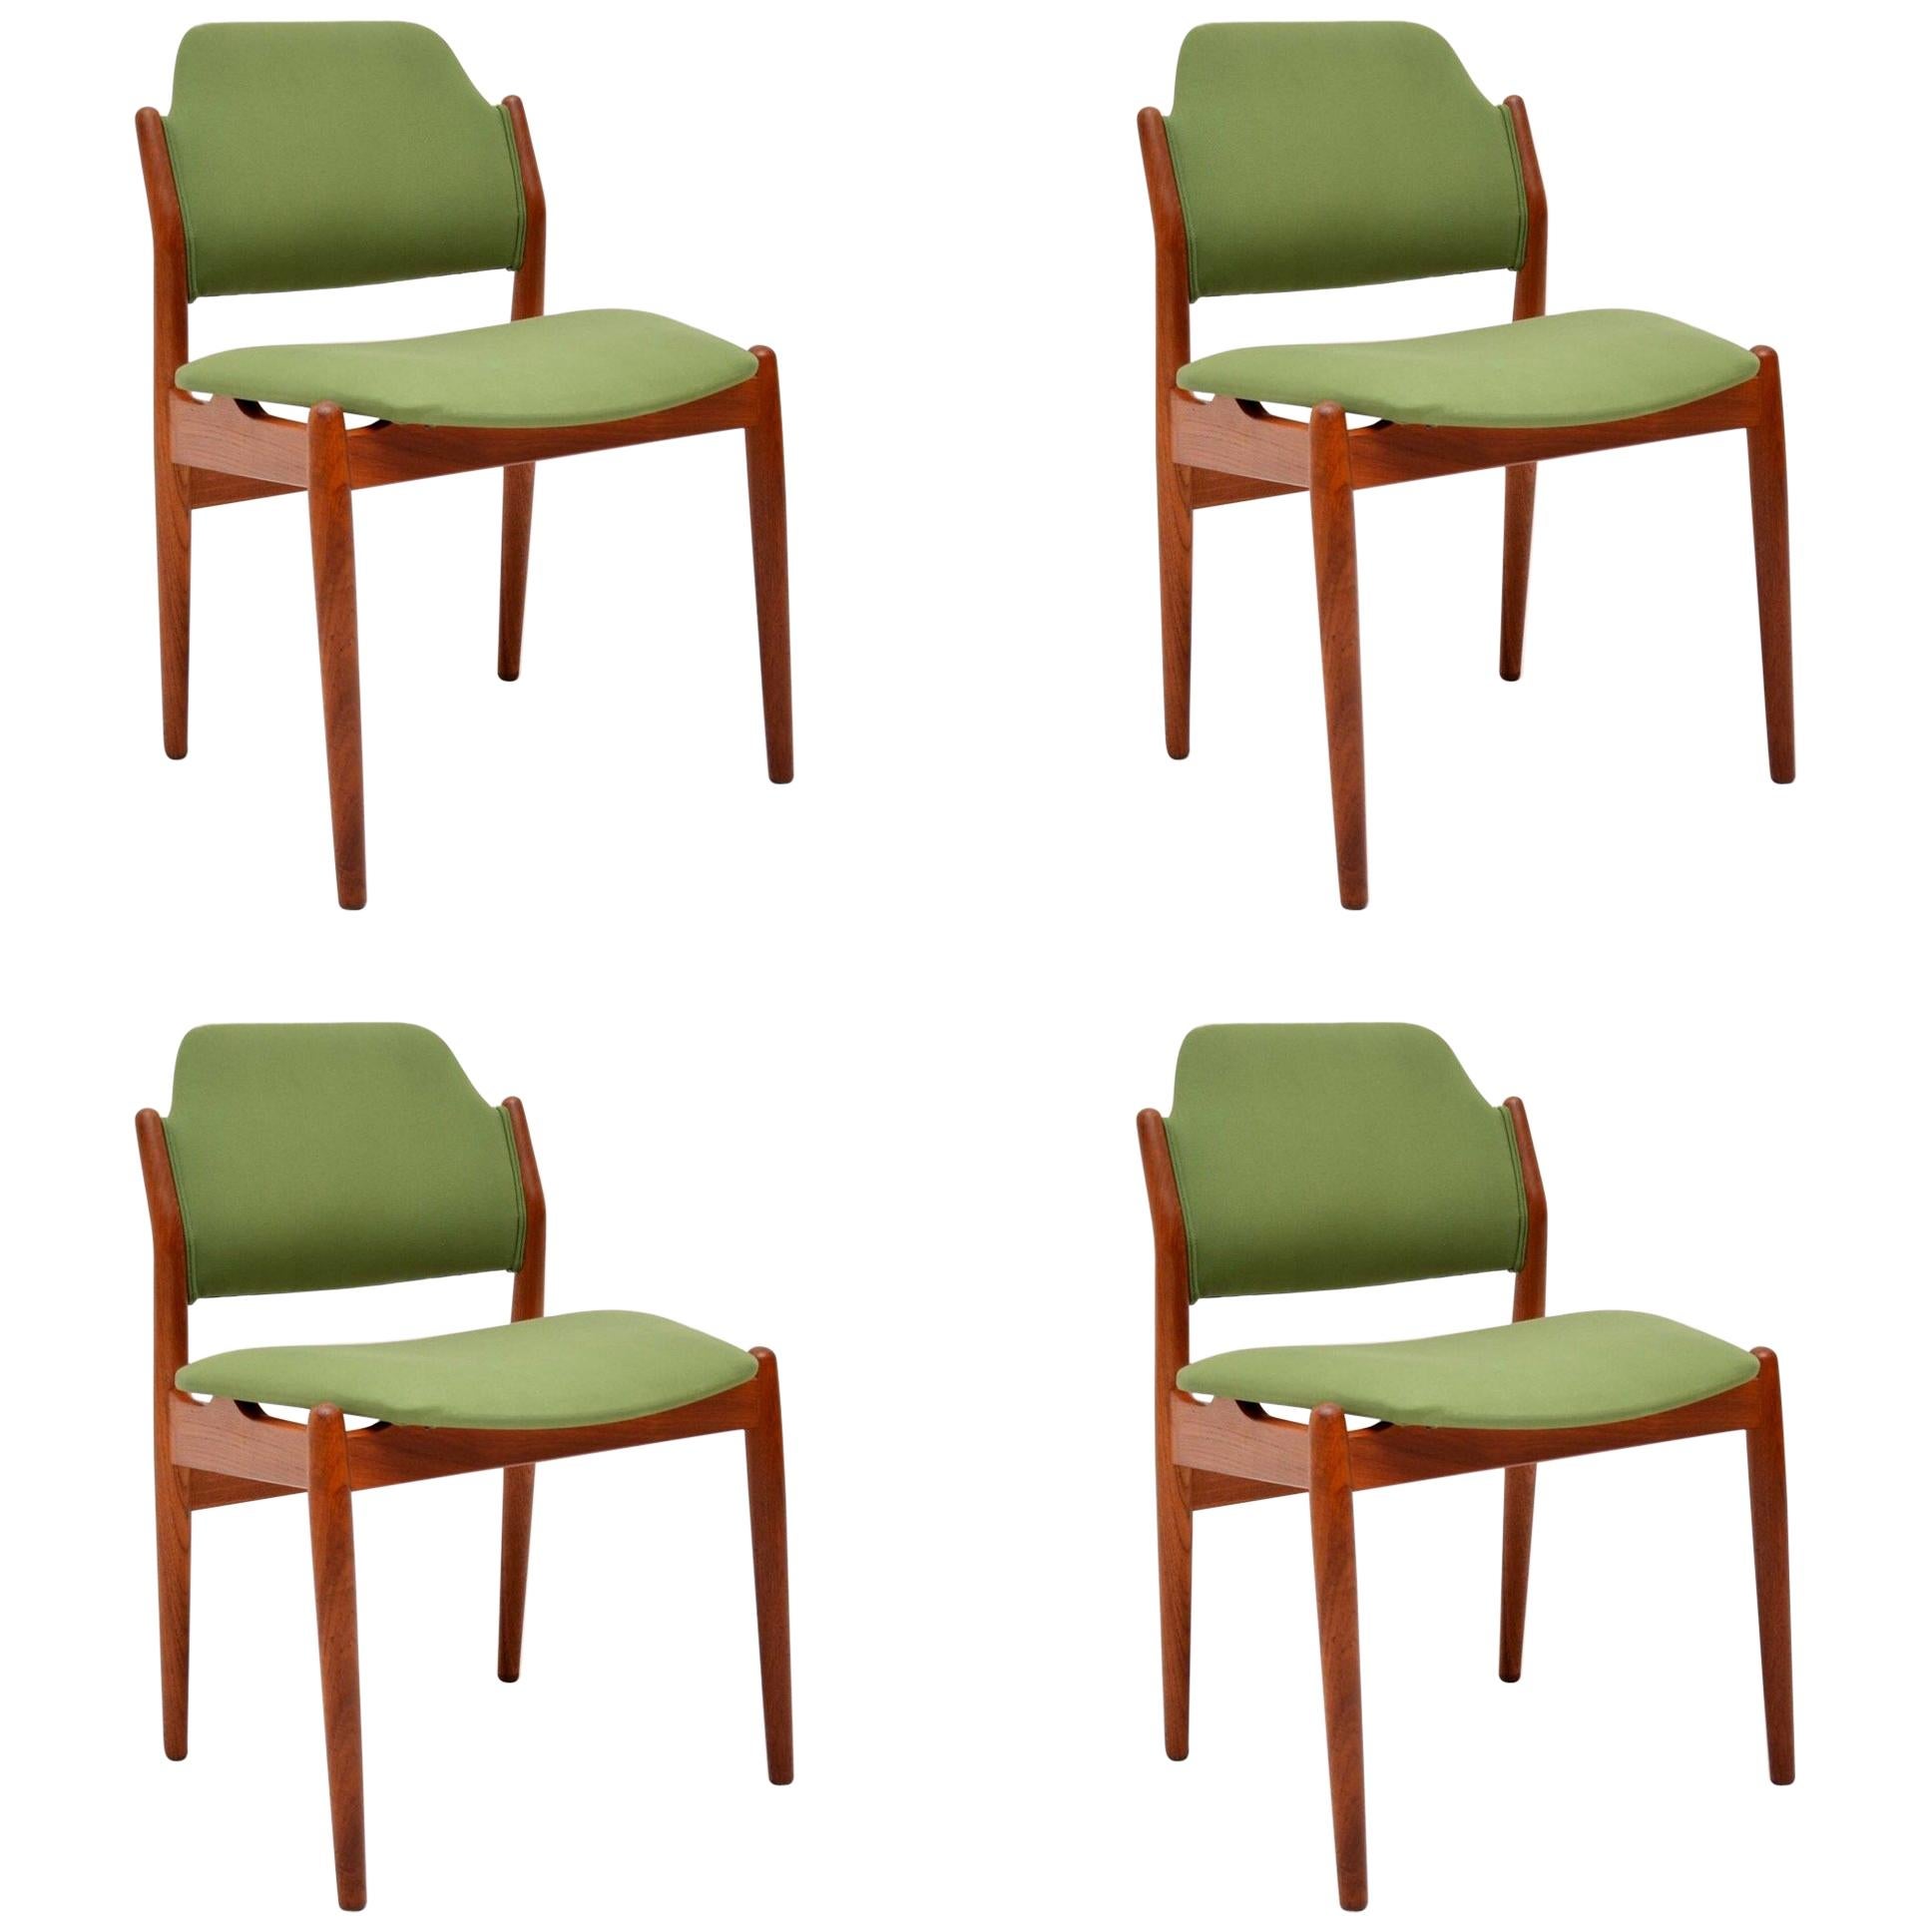 1960s Set of 4 Danish Teak Dining Chairs by Arne Vodder